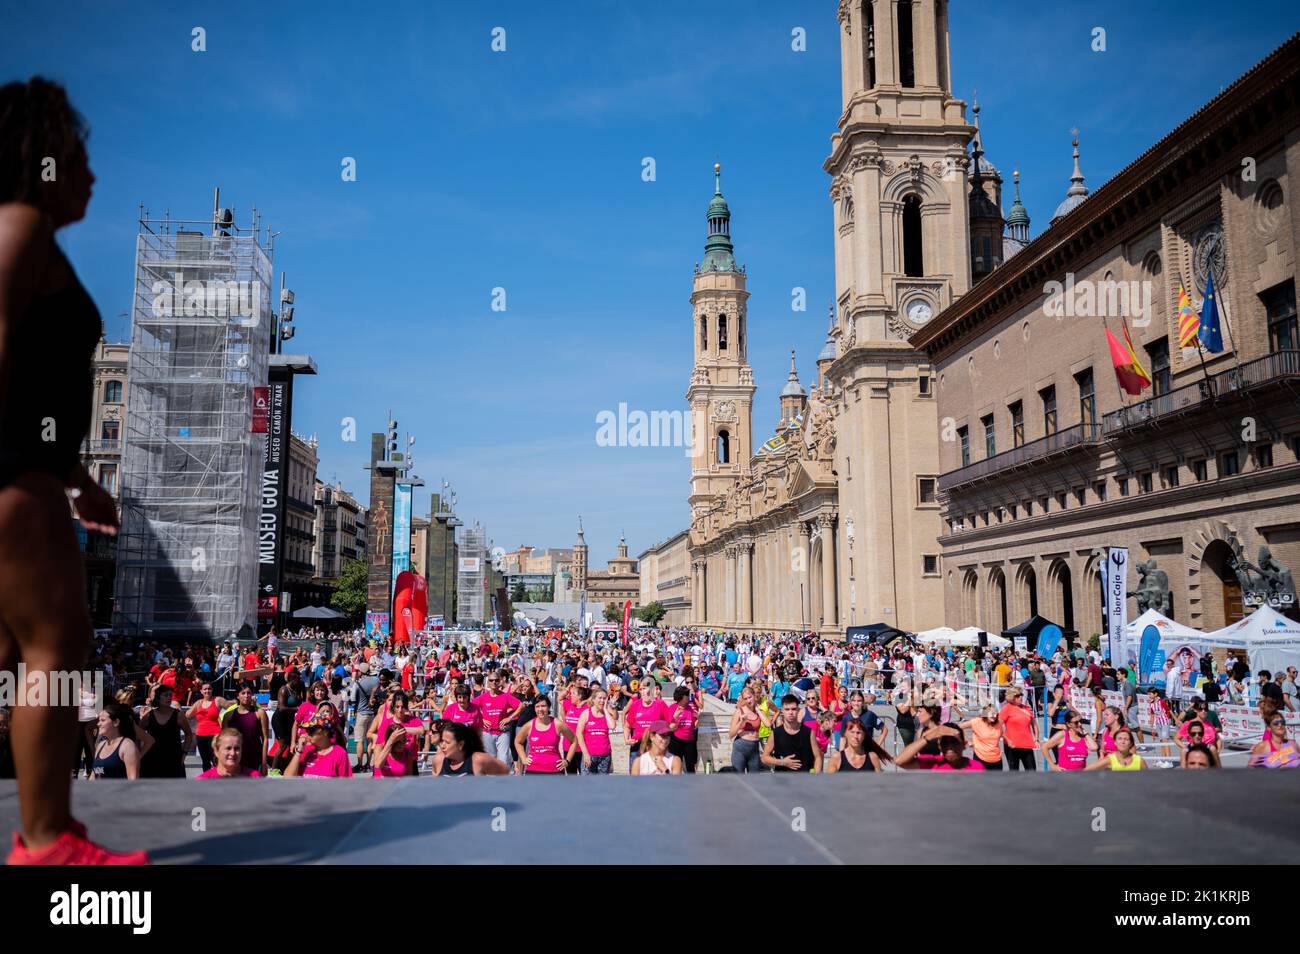 Group dance class at Sports Day multi-sports street event in Plaza del Pilar, Zaragoza, Spain Stock Photo